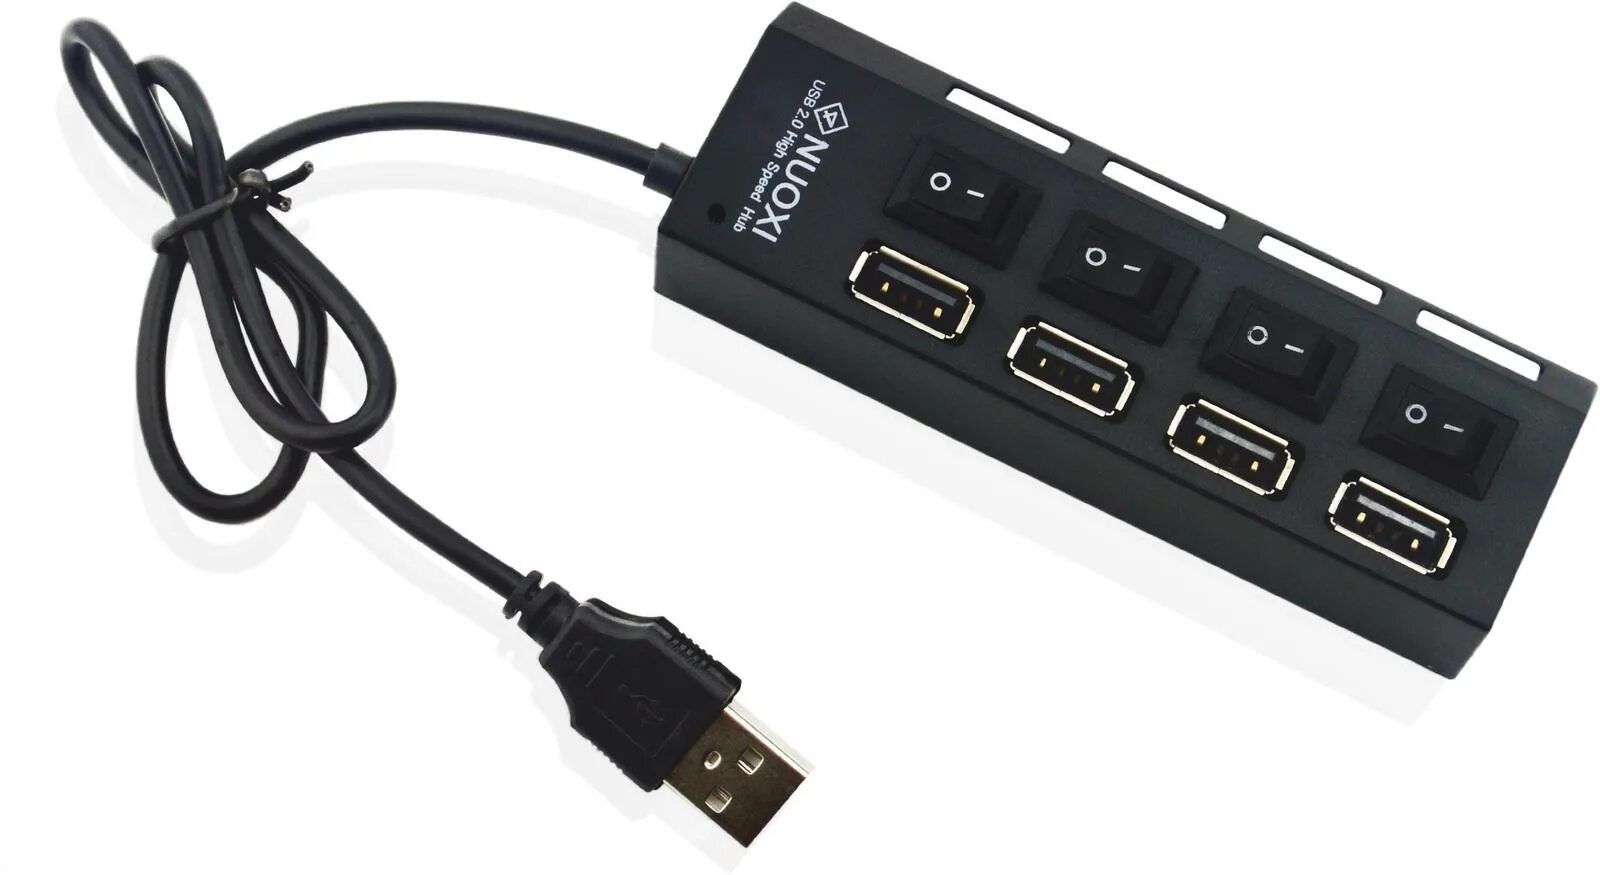 Разветвитель USB-Hub 2.0 (RTL-01a). 4 Ports USB 2.0 High Speed Hub. USB-разветвитель Esperanza USB 2.0 Hub 4-Port (ea127). USB-разветвитель (хаб) h401a. 2.0 high speed